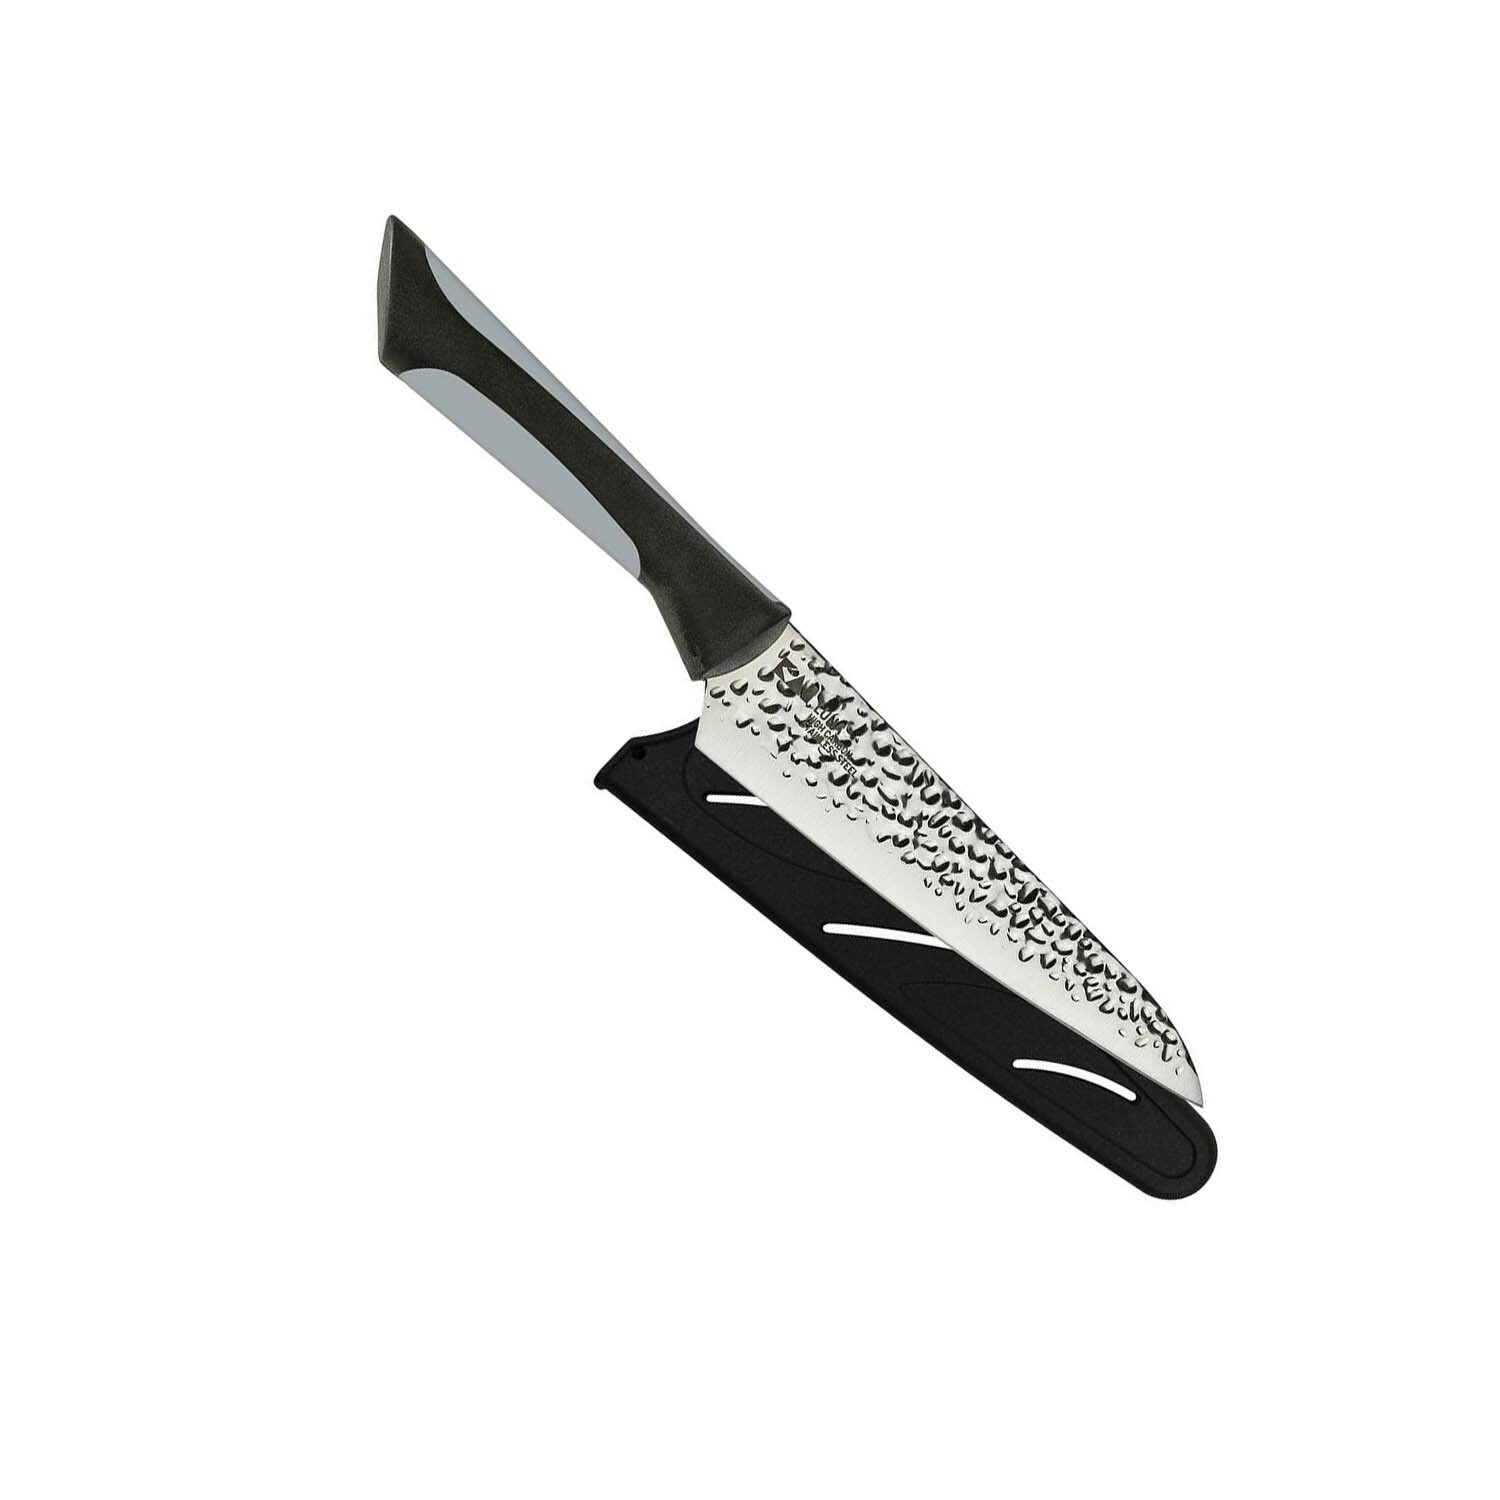 KAI Luna 3.5 Paring Knife, Soft Grip W/ Sheath